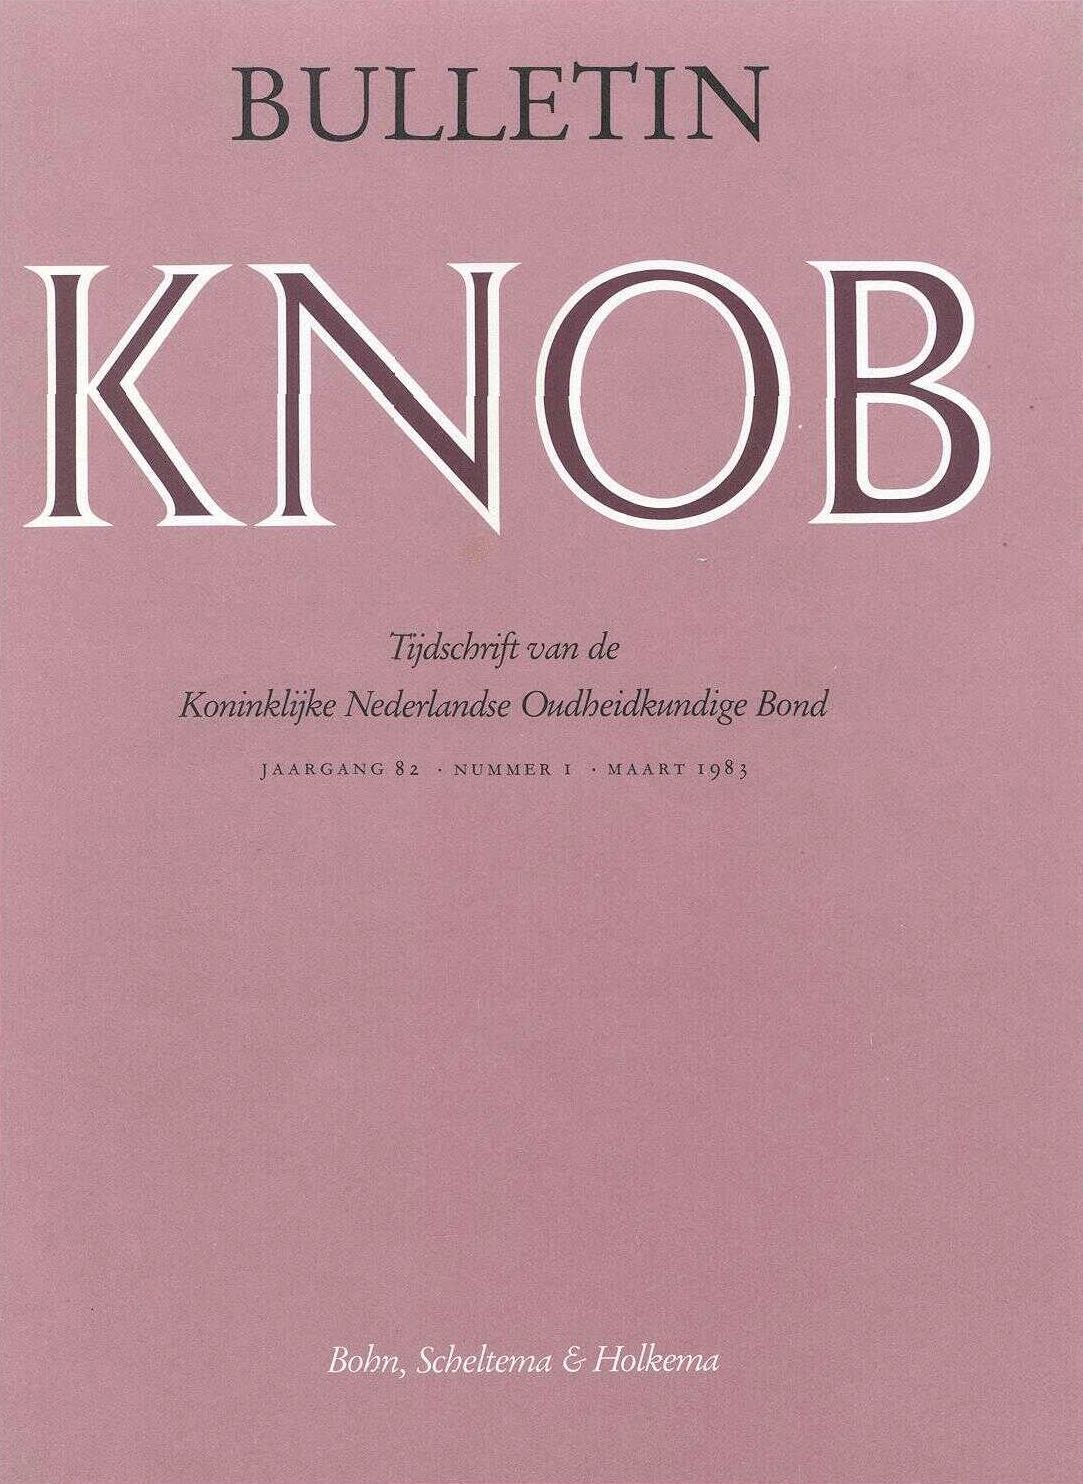 						Toon Bulletin KNOB 82 (1983) 1
					